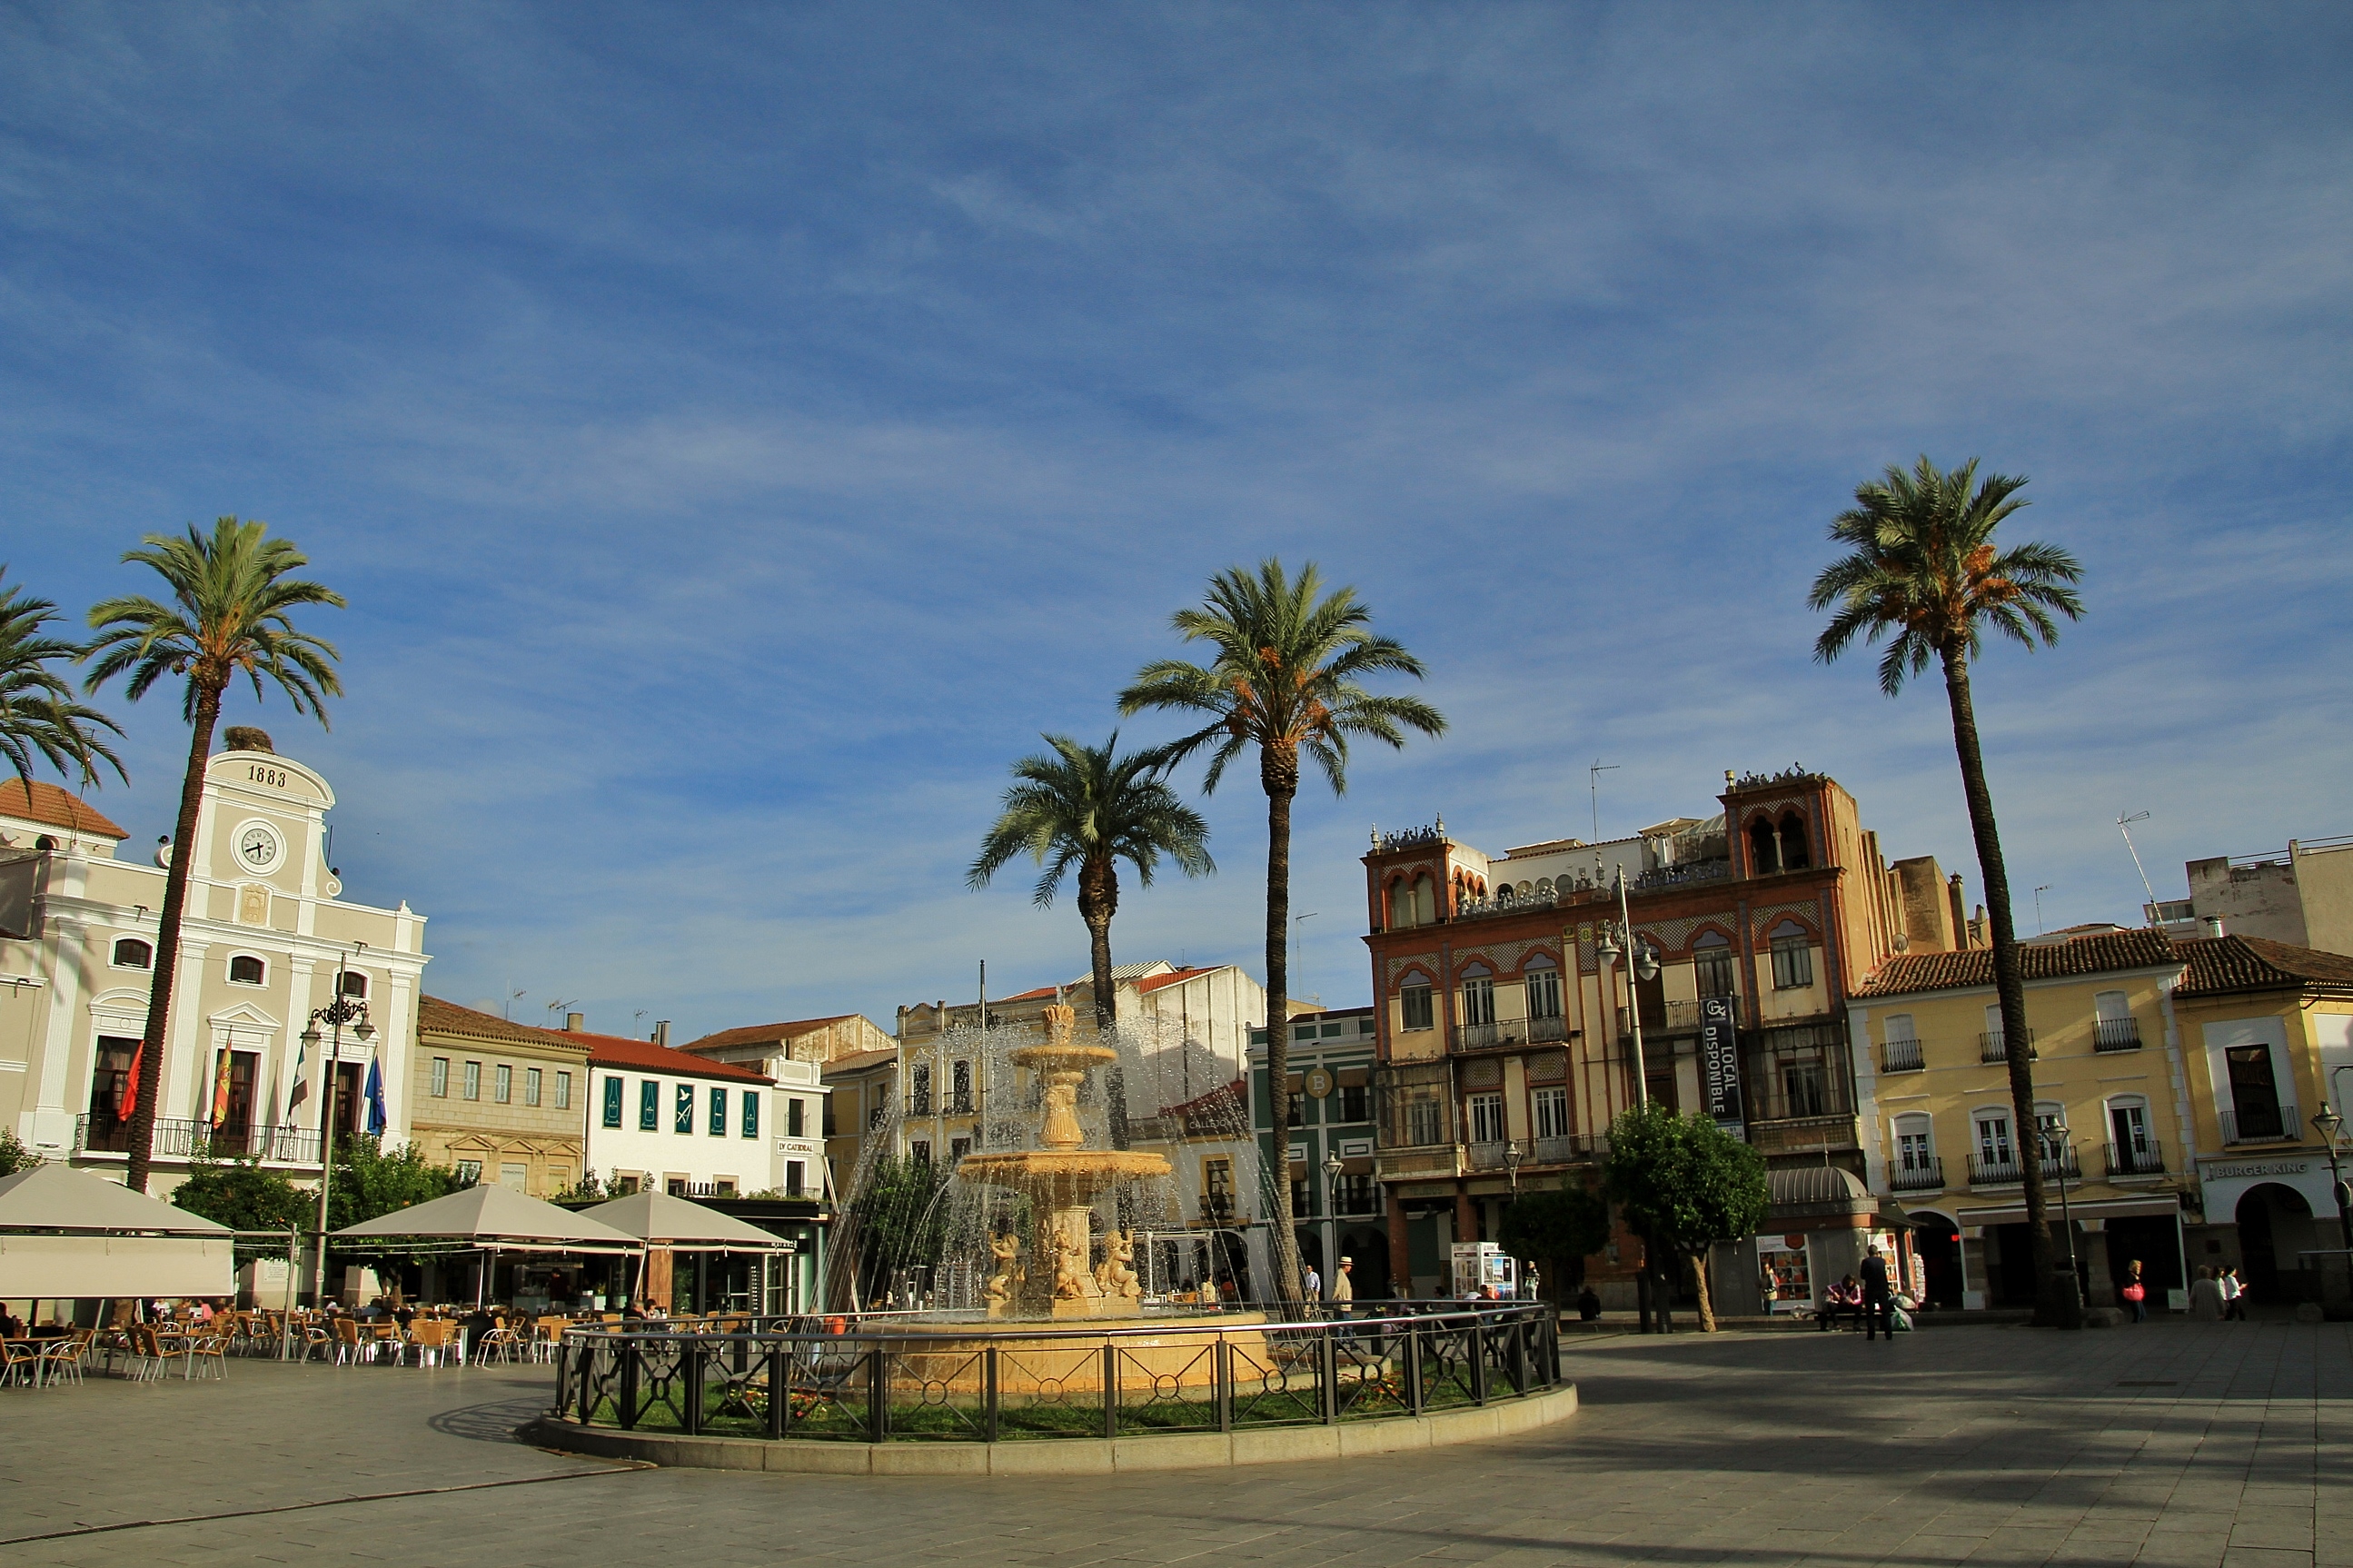 Foto: Centro histórico - Mérida (Badajoz), España